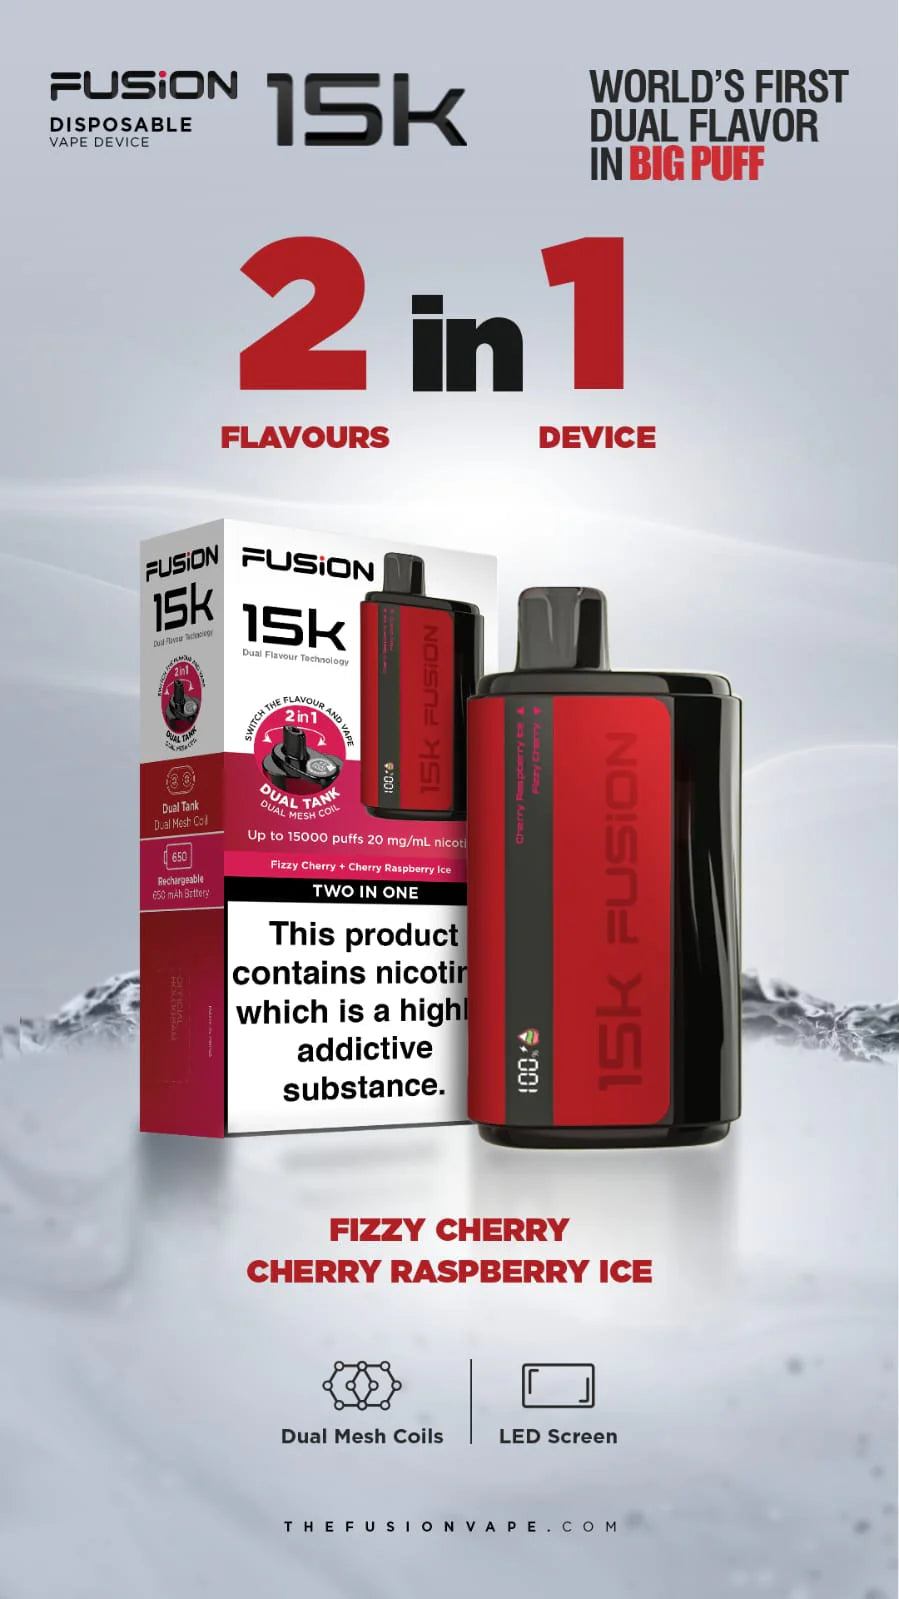 Fizzy_Cherry_Cherry_Raspberry fusion 15k